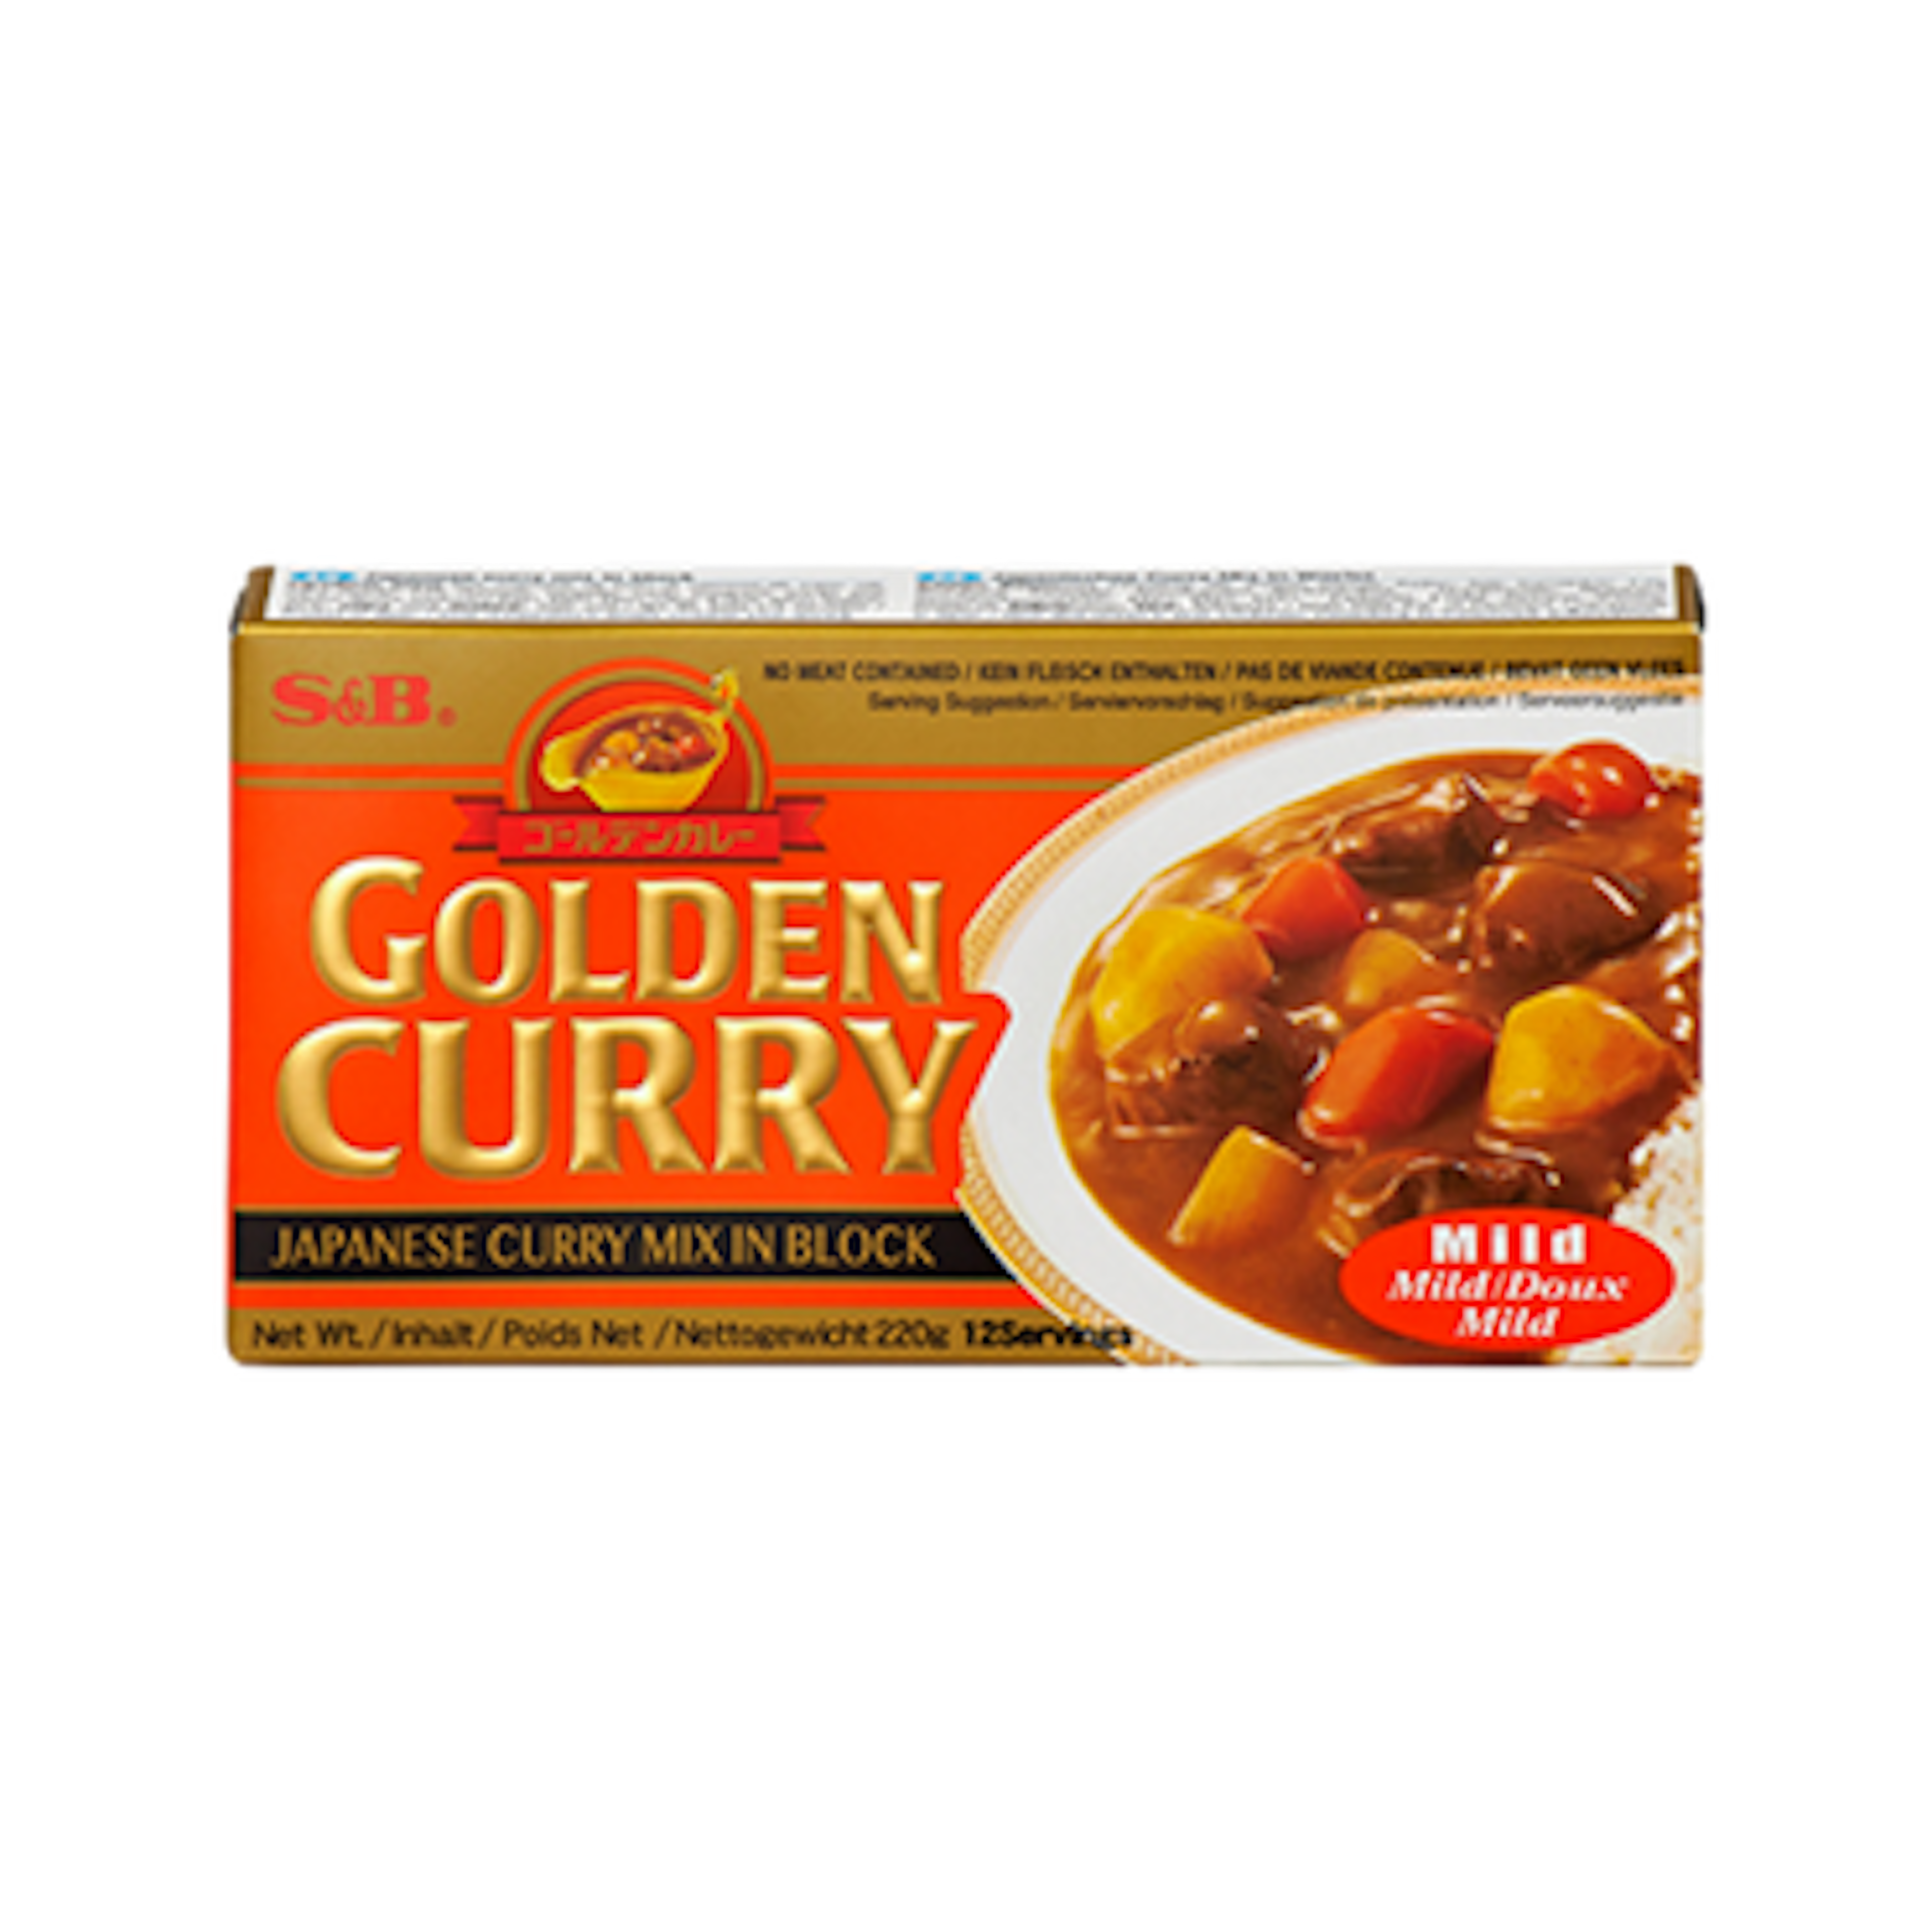 S&B Golden Curry Sauce Mild